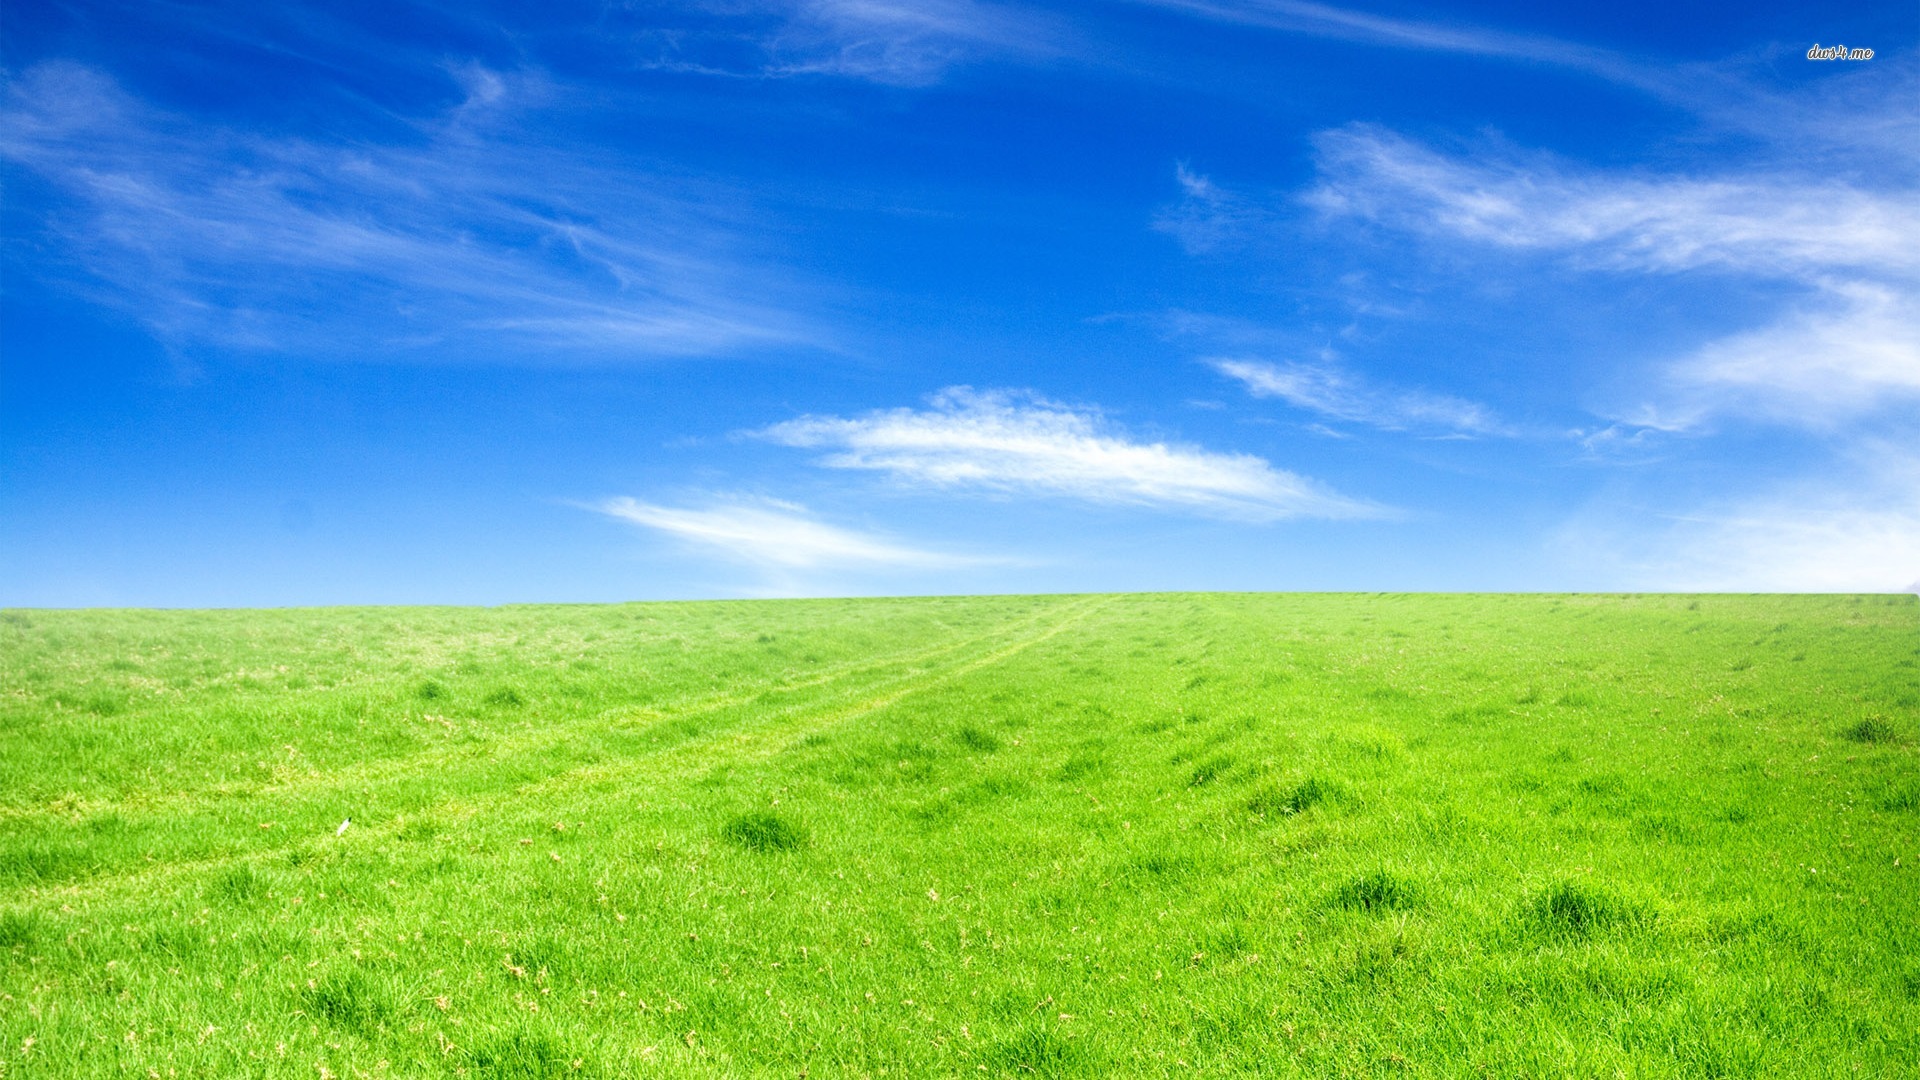 Best Green Field - Sky Nature Background - 1920x1080 Wallpaper 